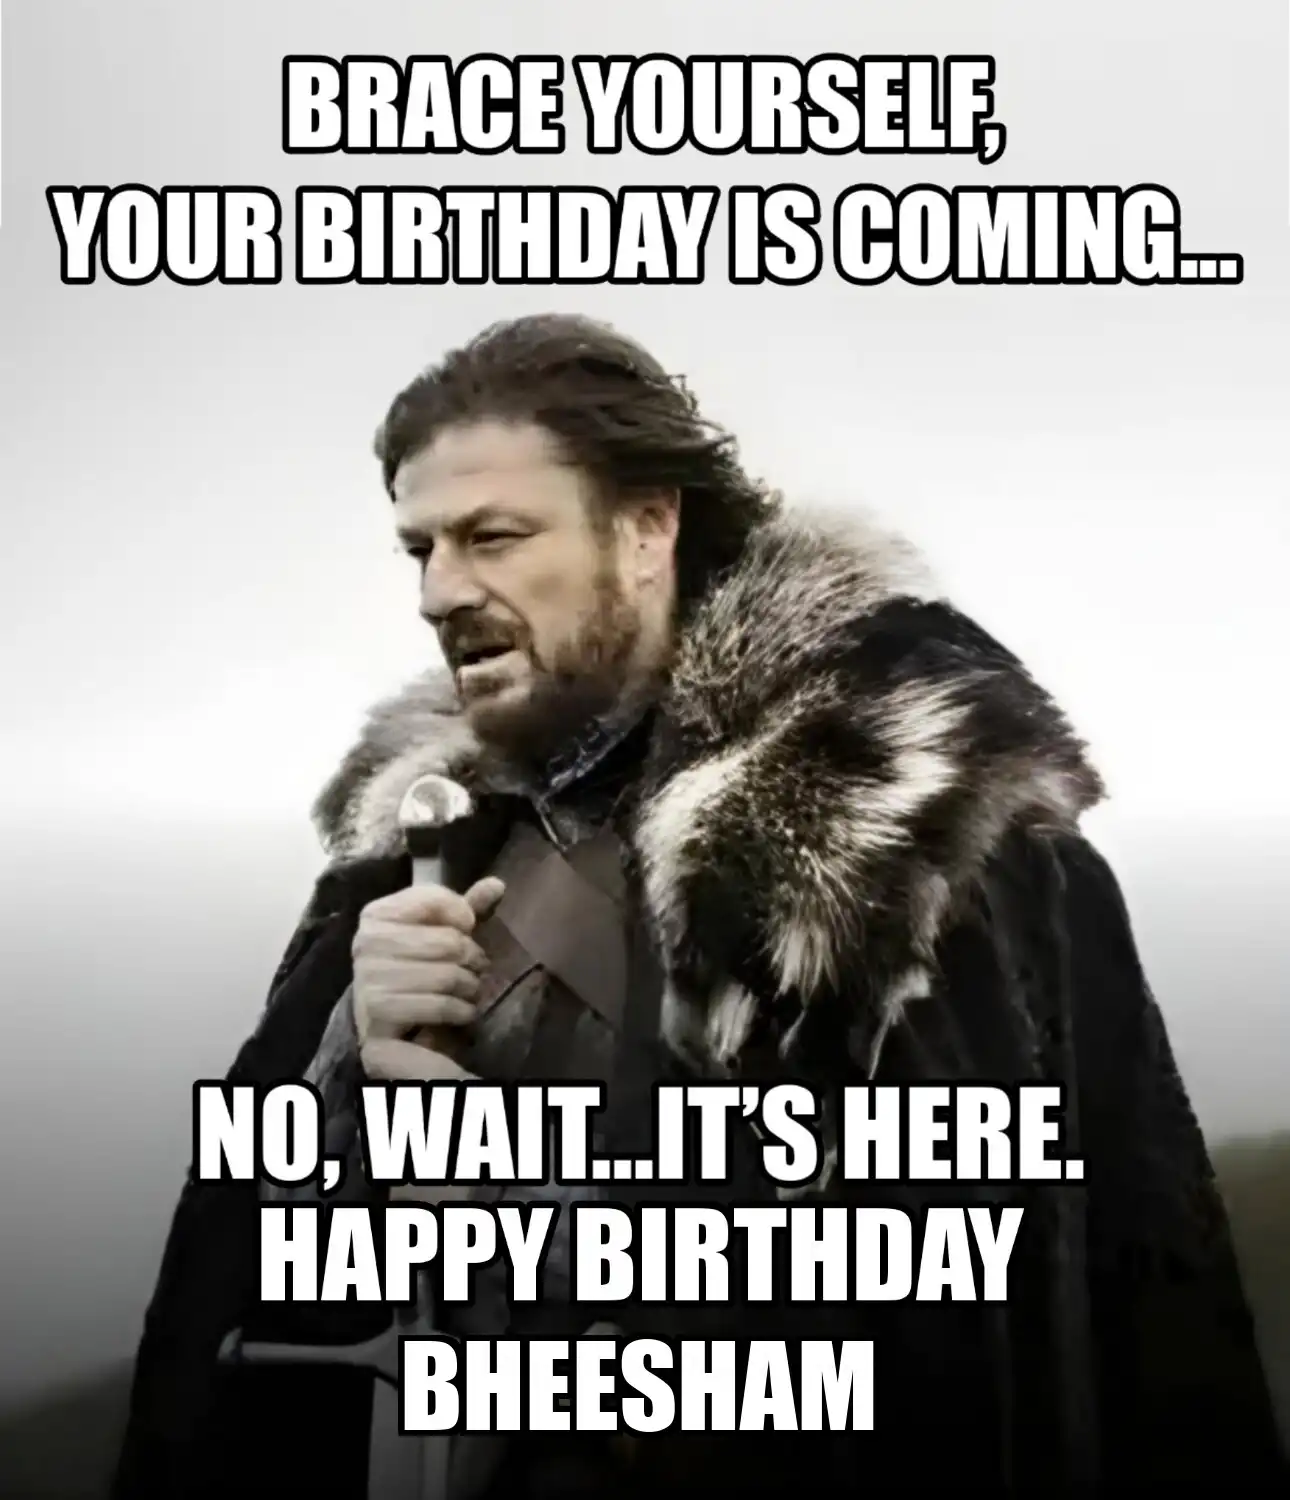 Happy Birthday Bheesham Brace Yourself Your Birthday Is Coming Meme